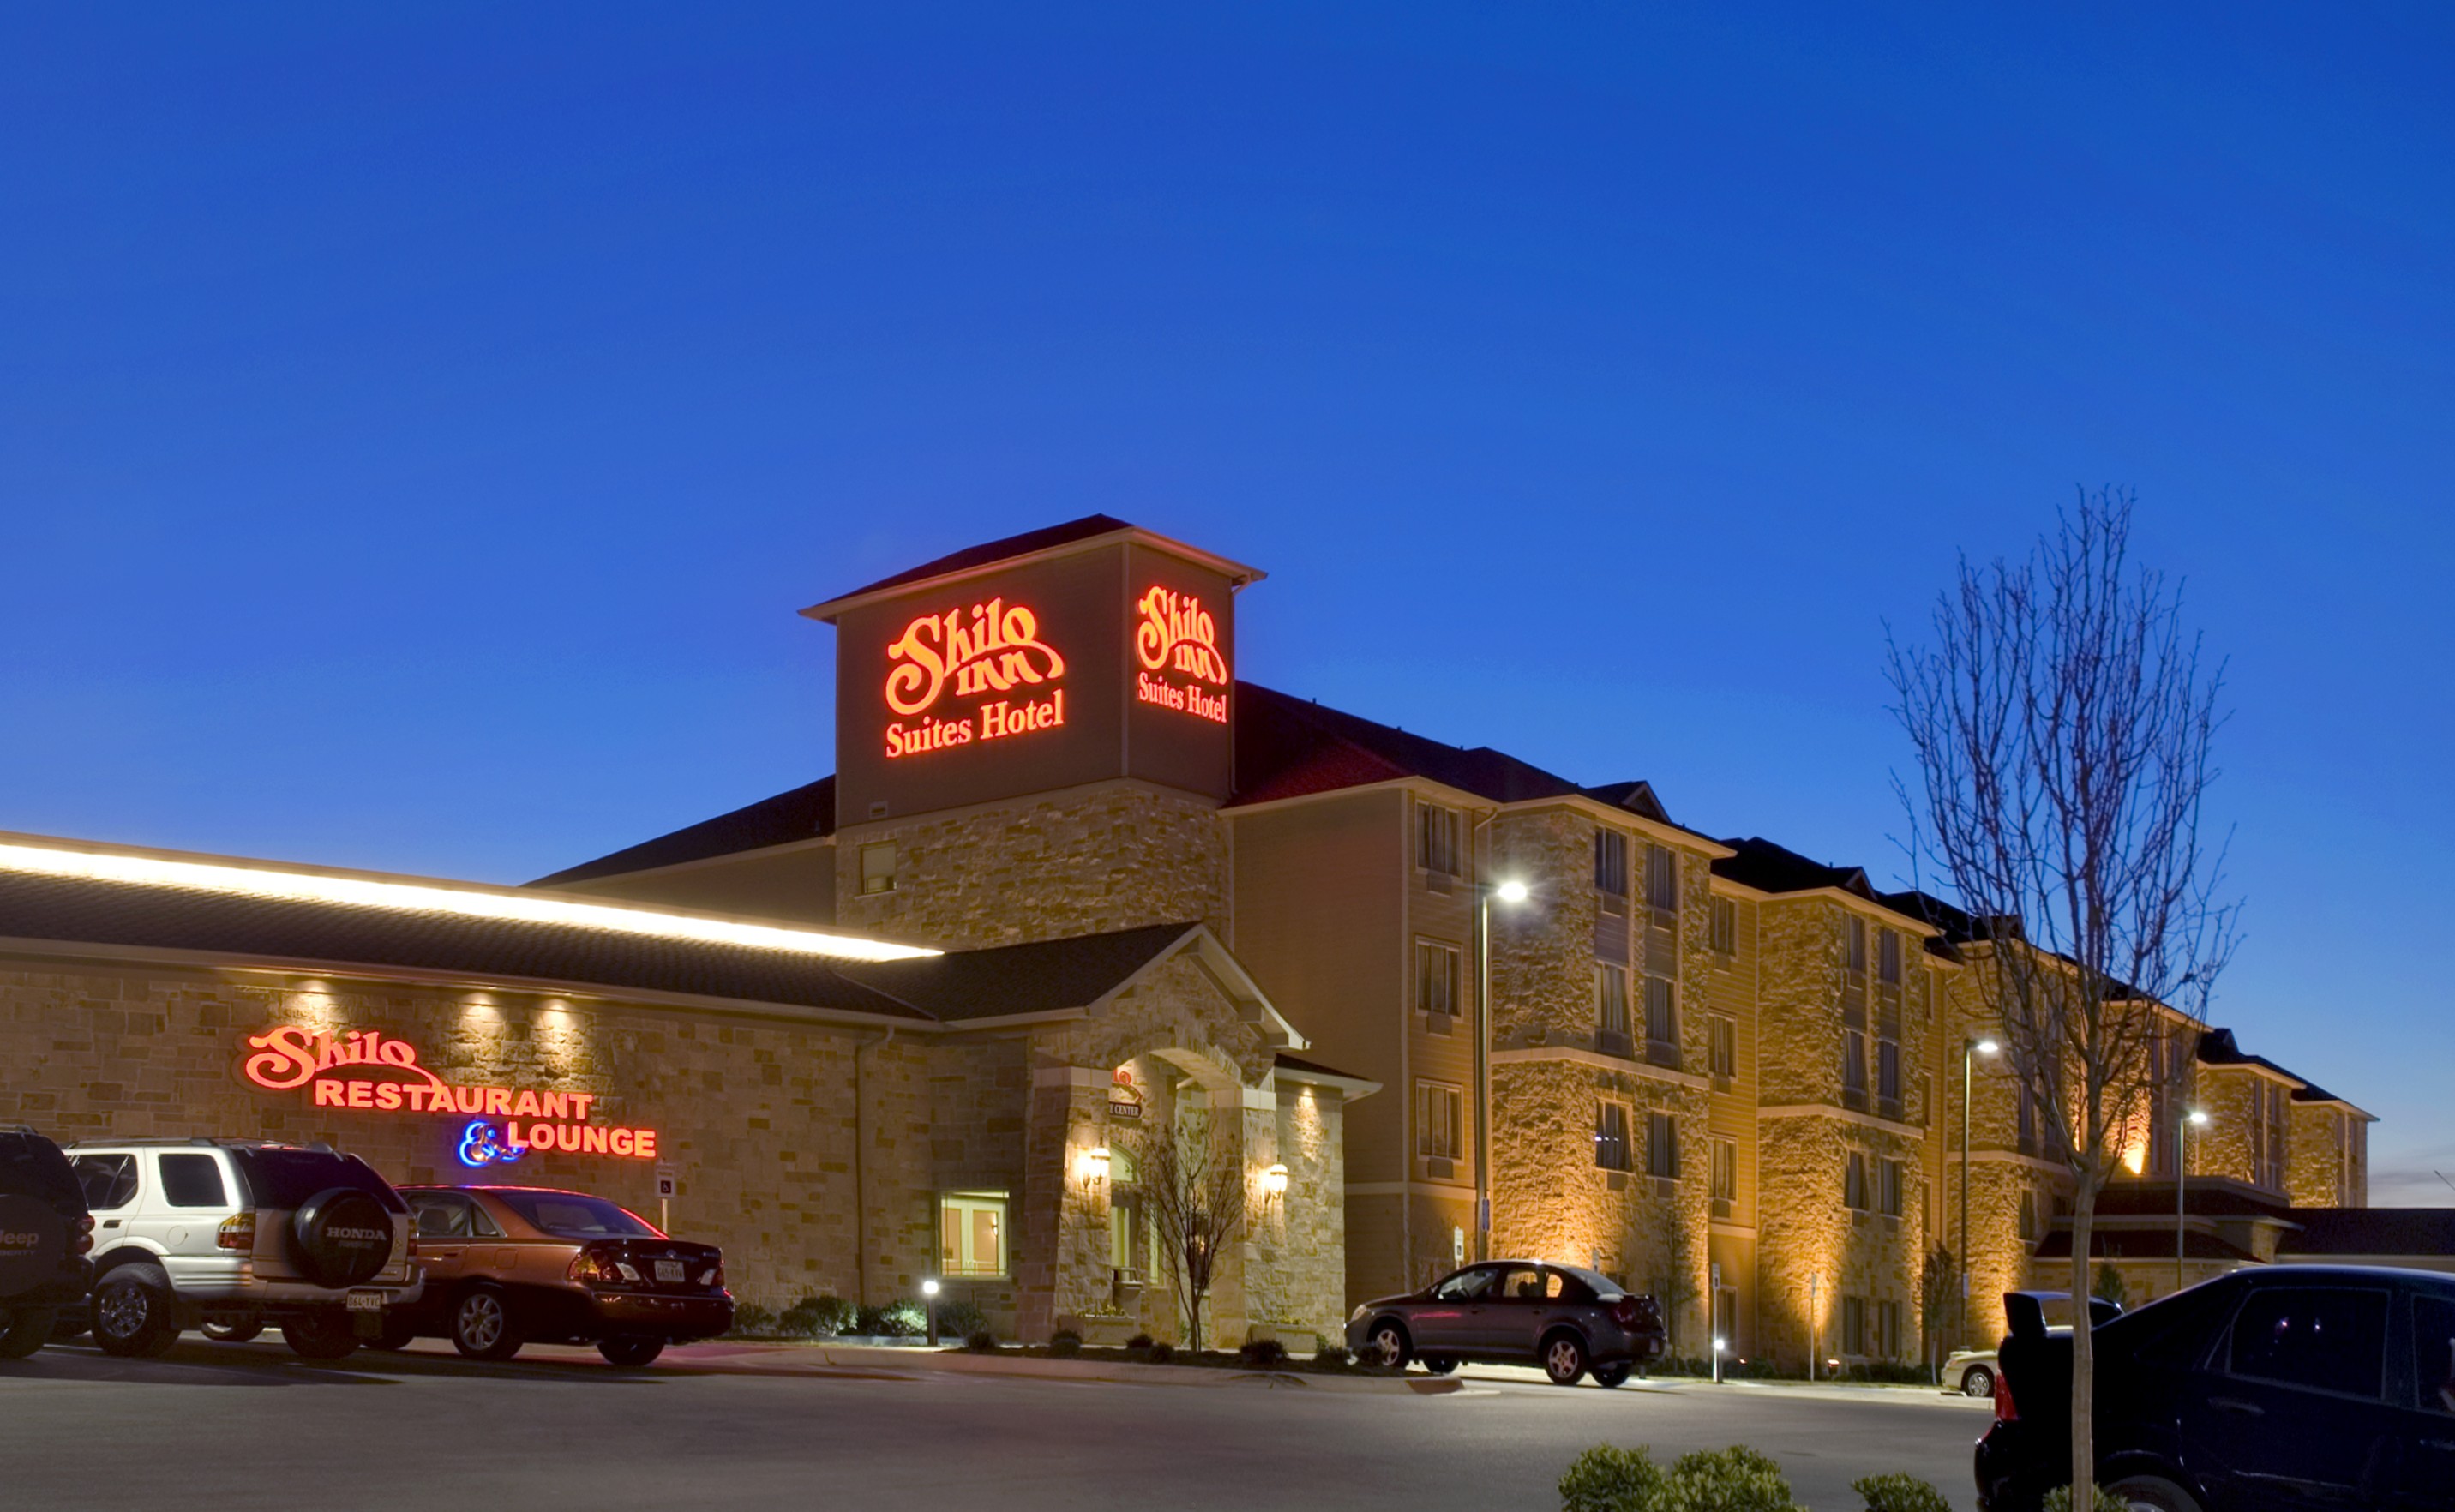 Shilo Inns Suites Hotels Killeen Texas